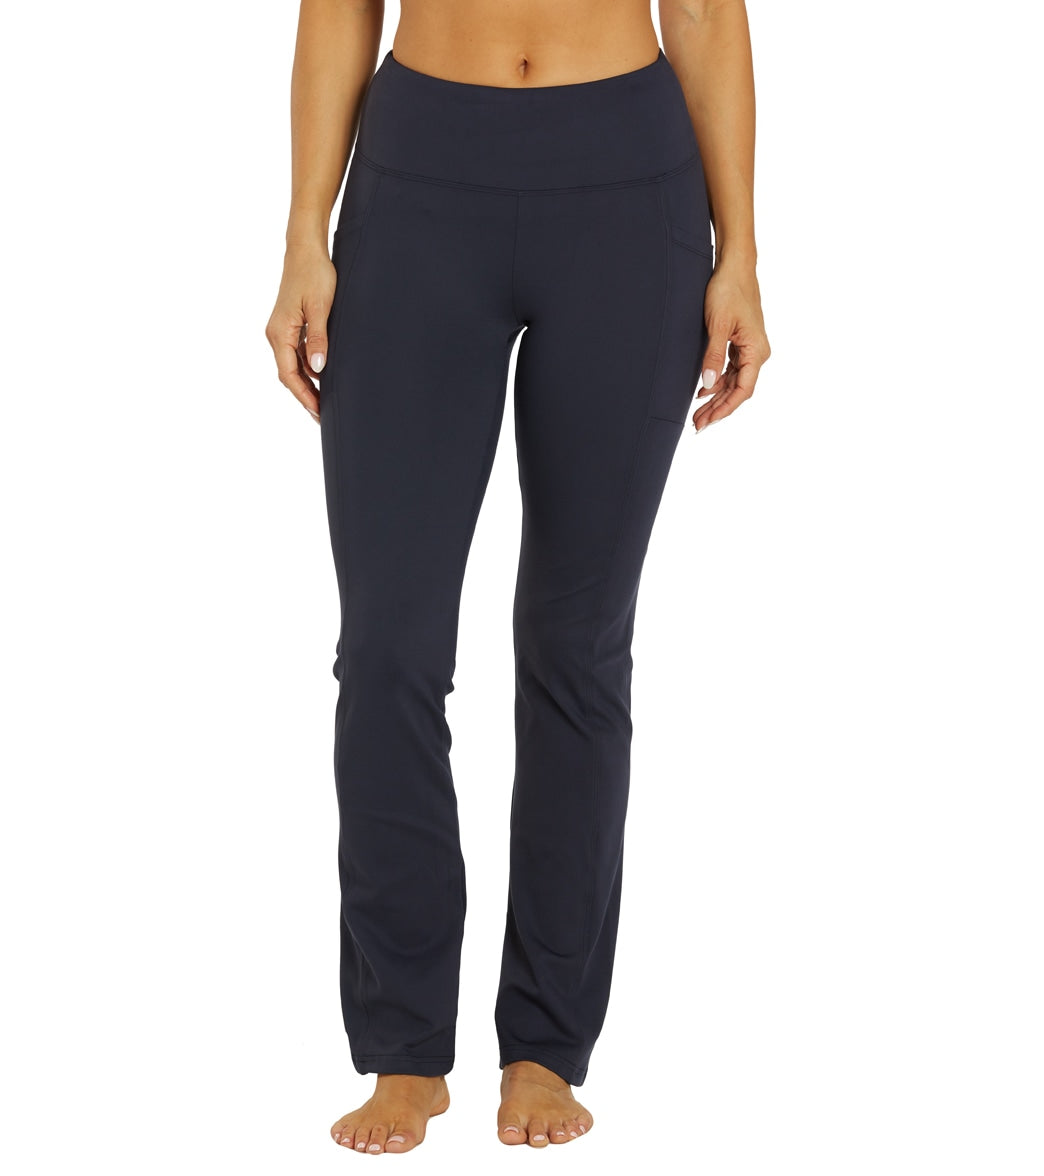 Cotton Yoga Pant - Grey Melange  Grey yoga pants, Cotton yoga pants, Yoga  pants